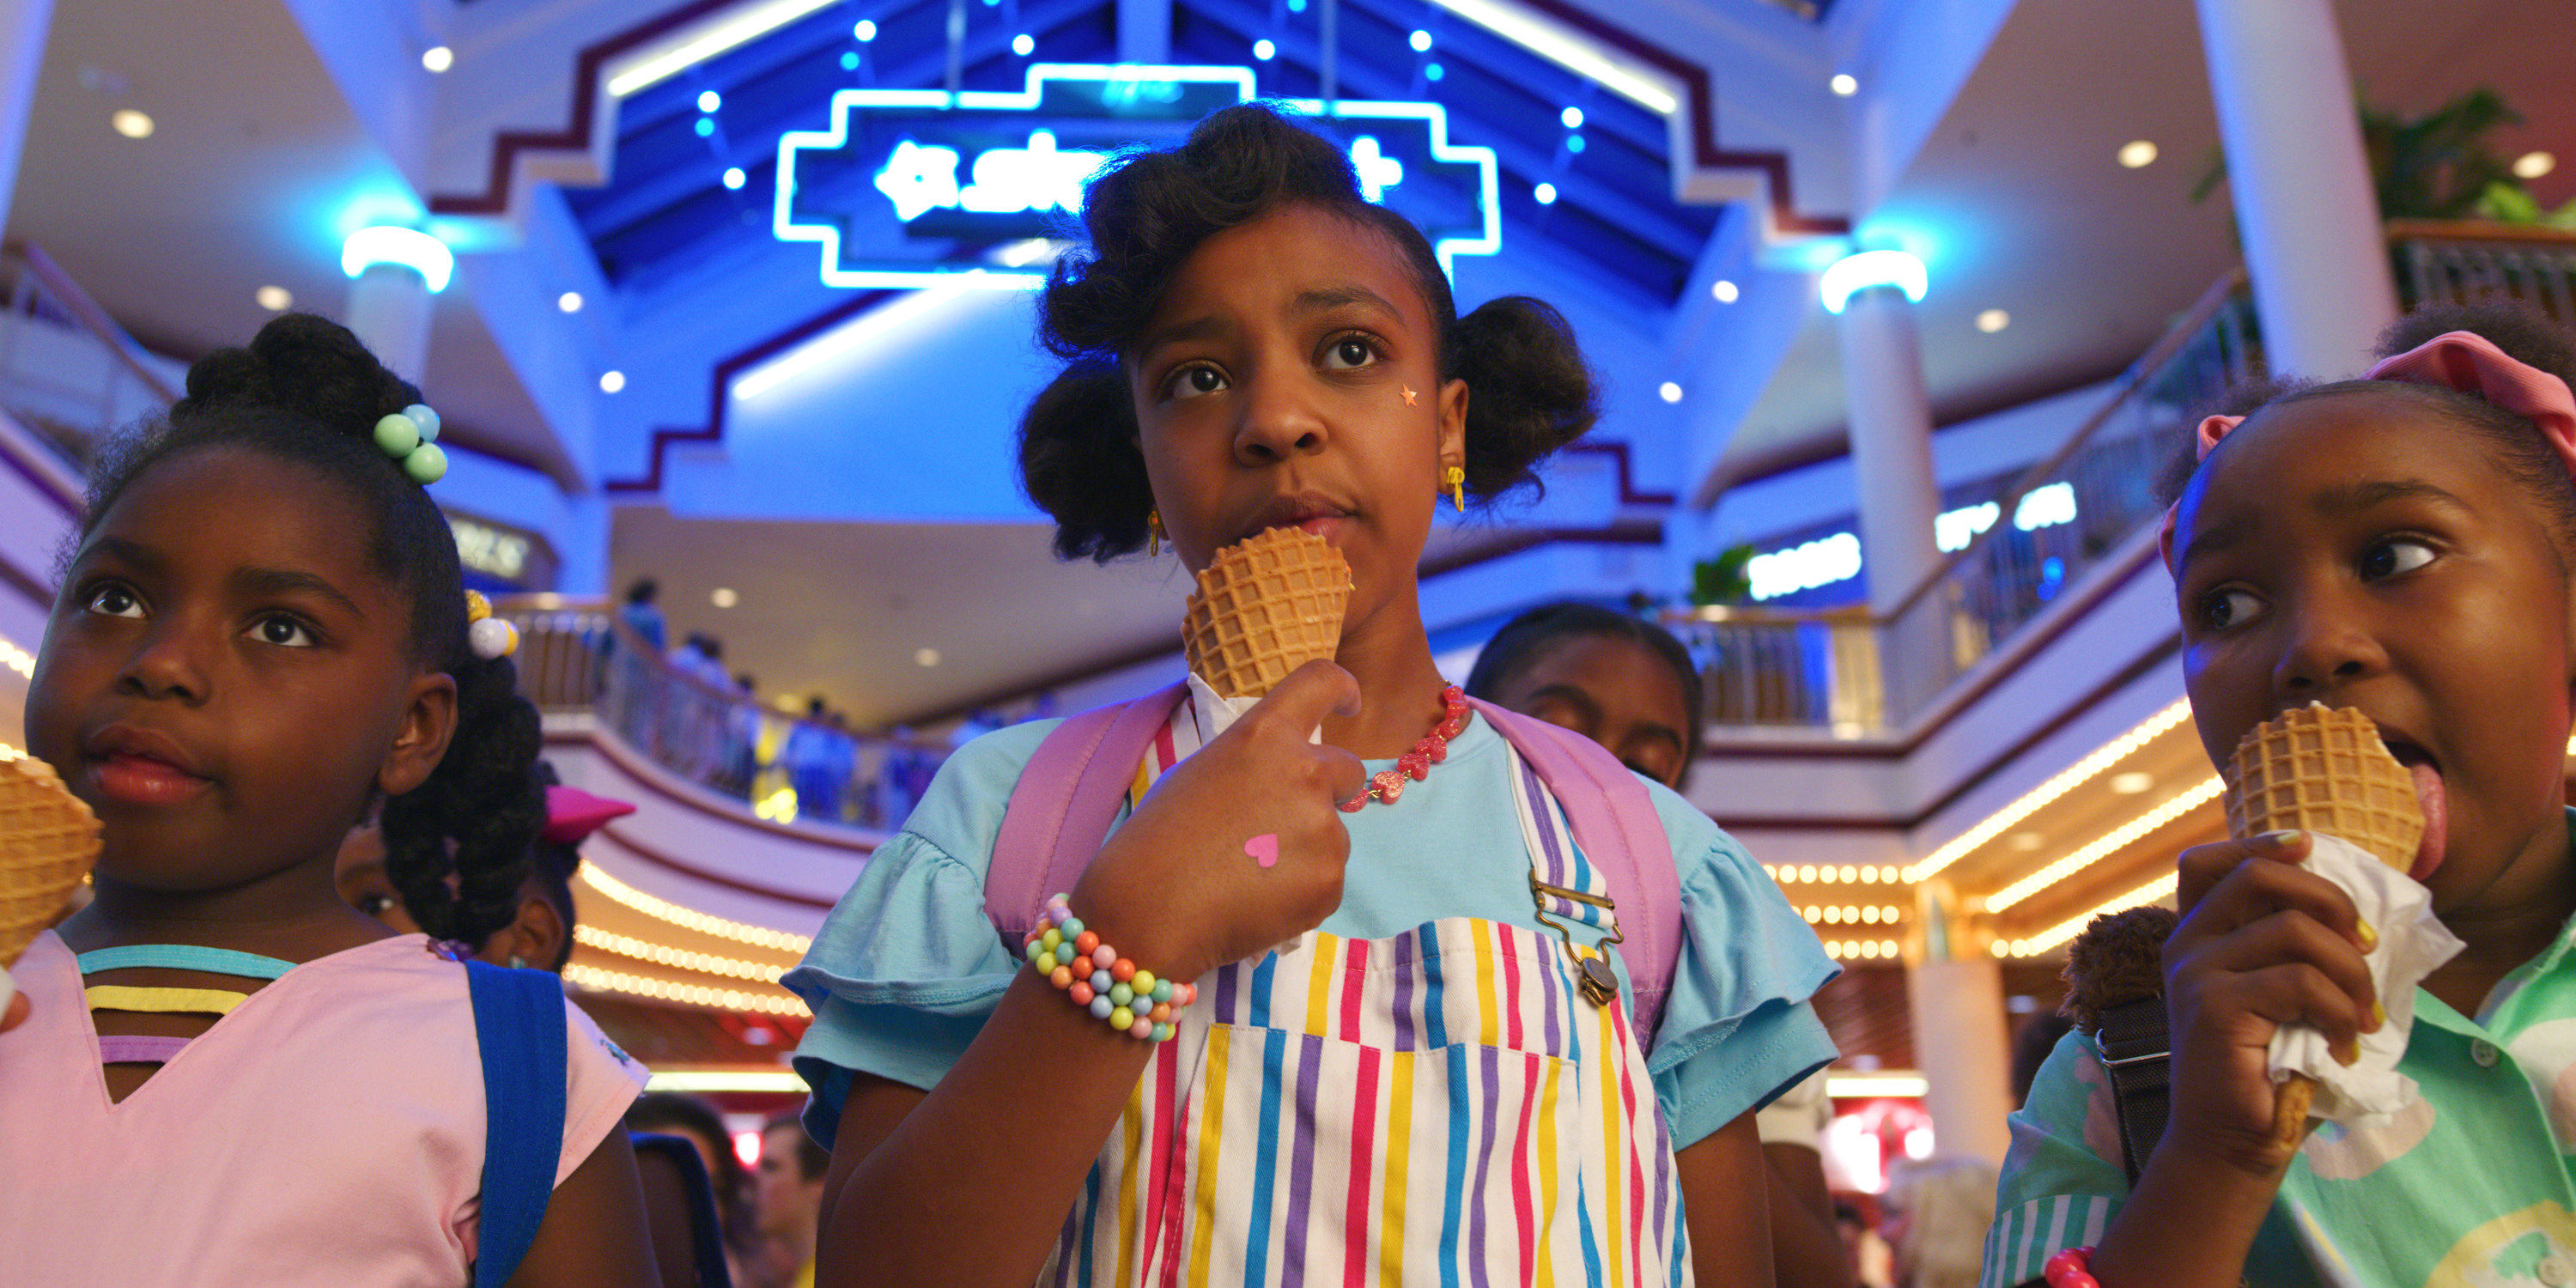 Priah与其他孩子吃冰淇凌